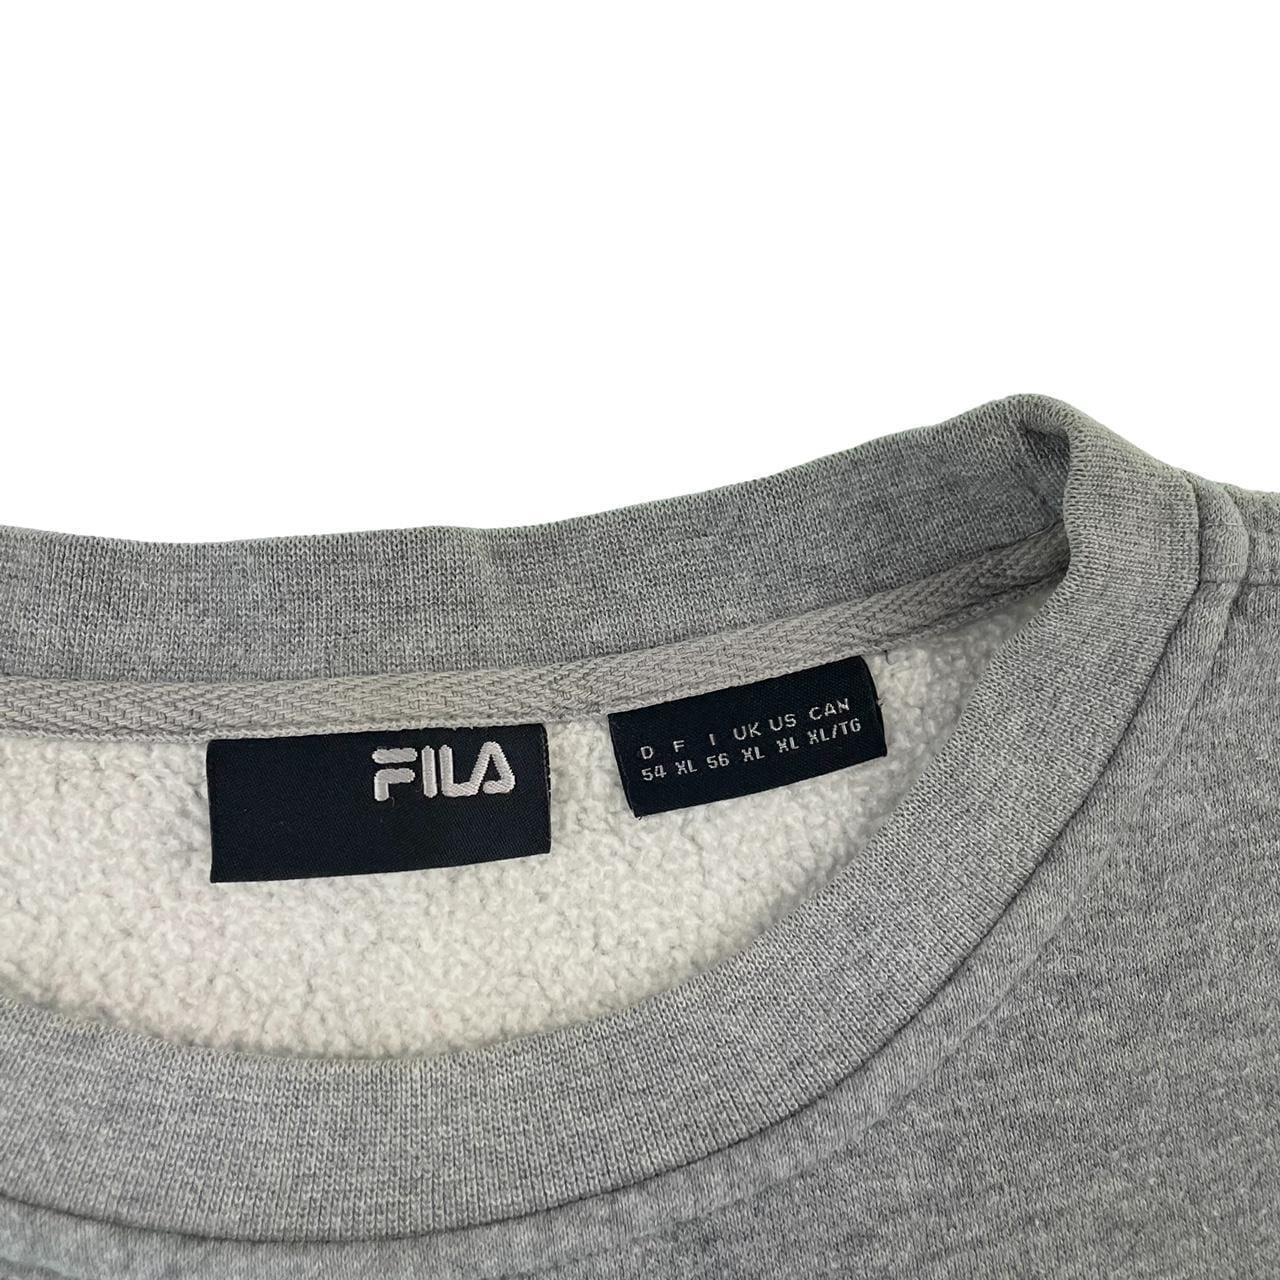 Vintage Fila logo jumper sweatshirt size XL - Known Source